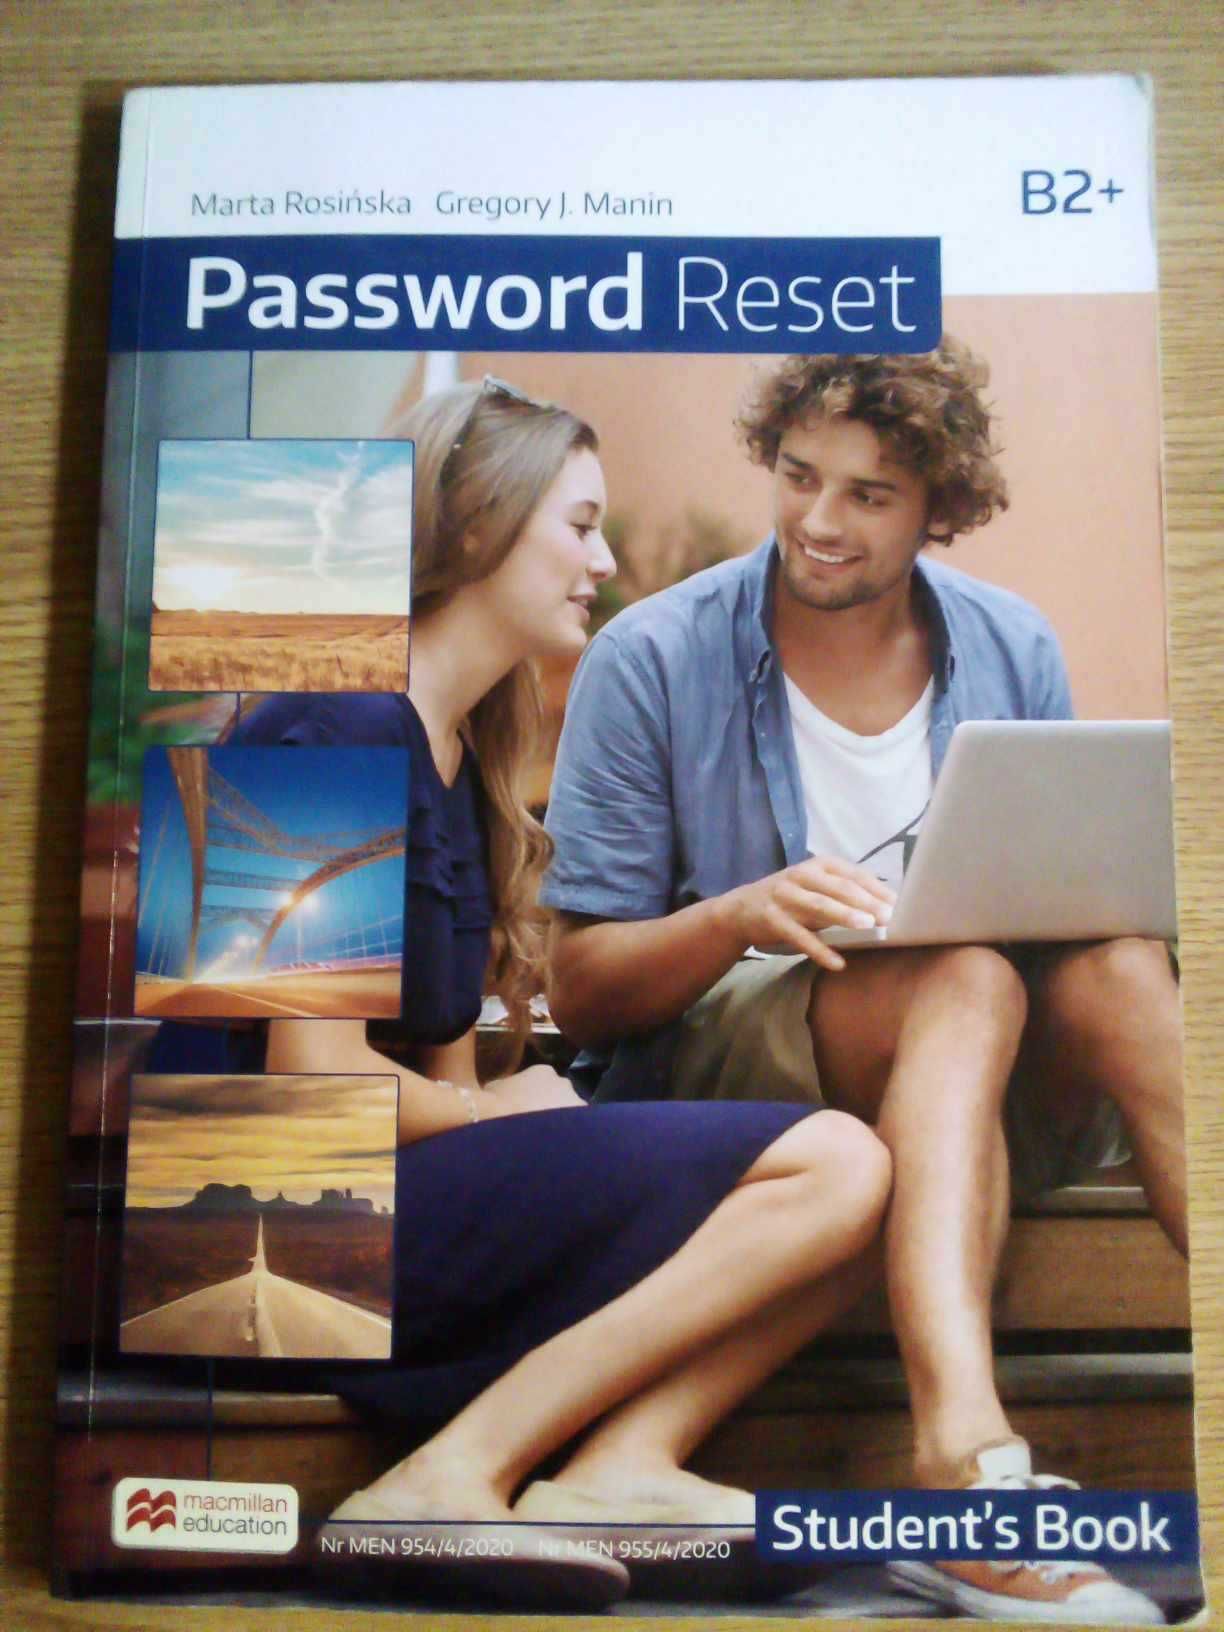 password reset b2+ macmillan education (cena możliwa do negocjacji)